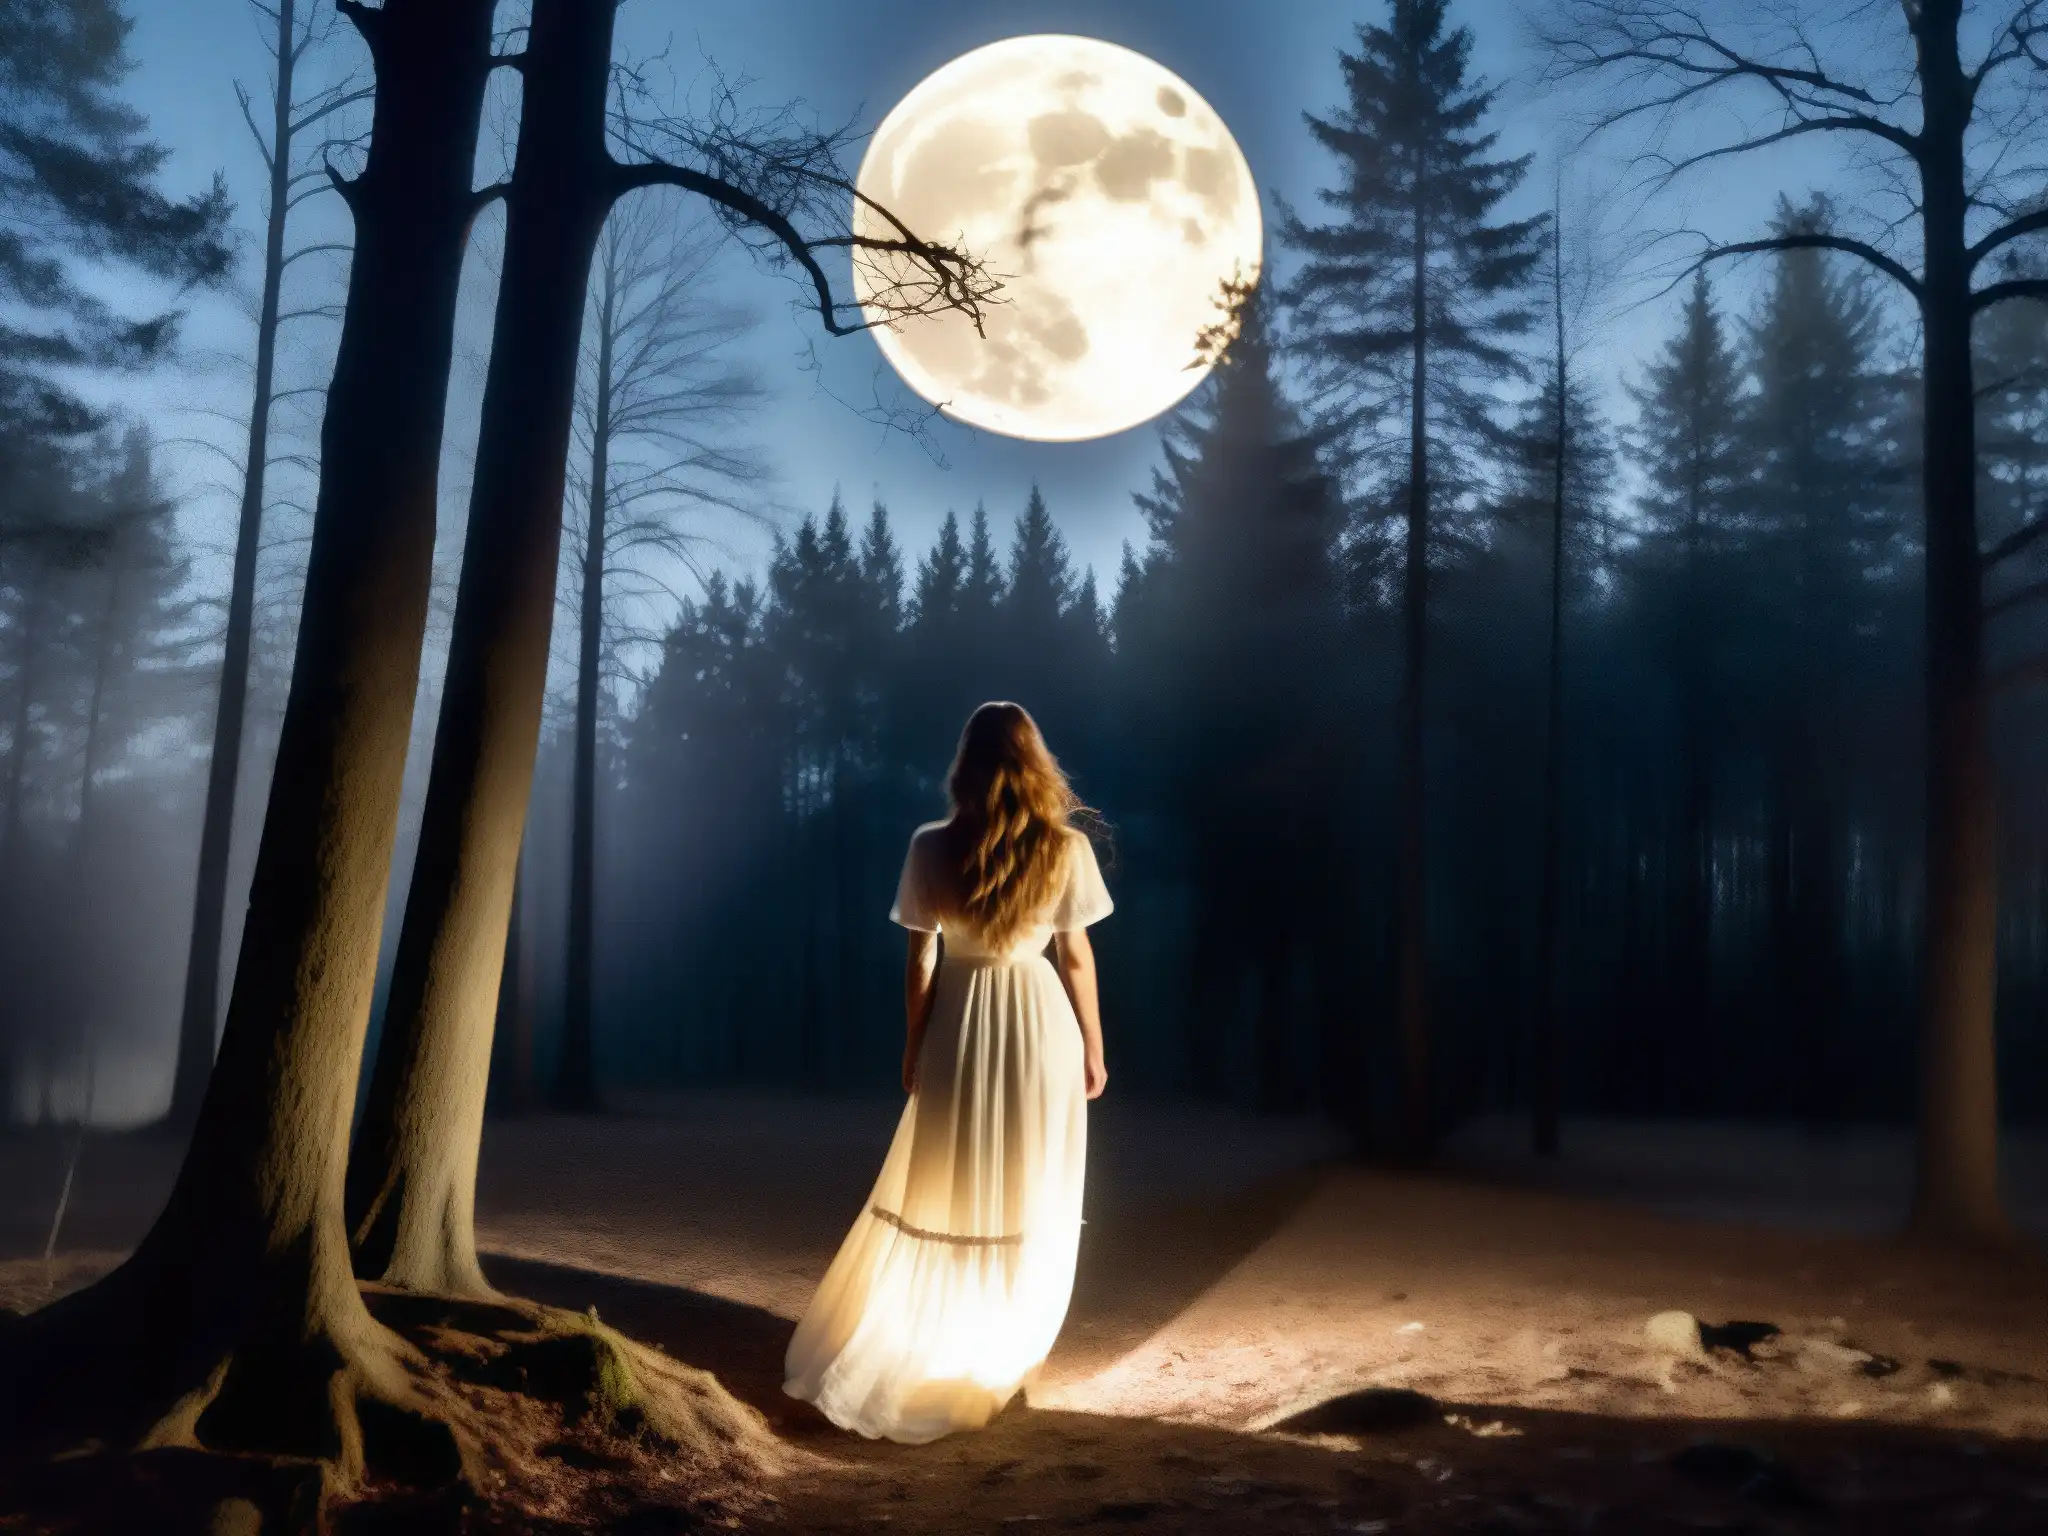 Silueta misteriosa de La Cegua en bosque nocturno iluminado por la luna, evocando el mito centroamericano